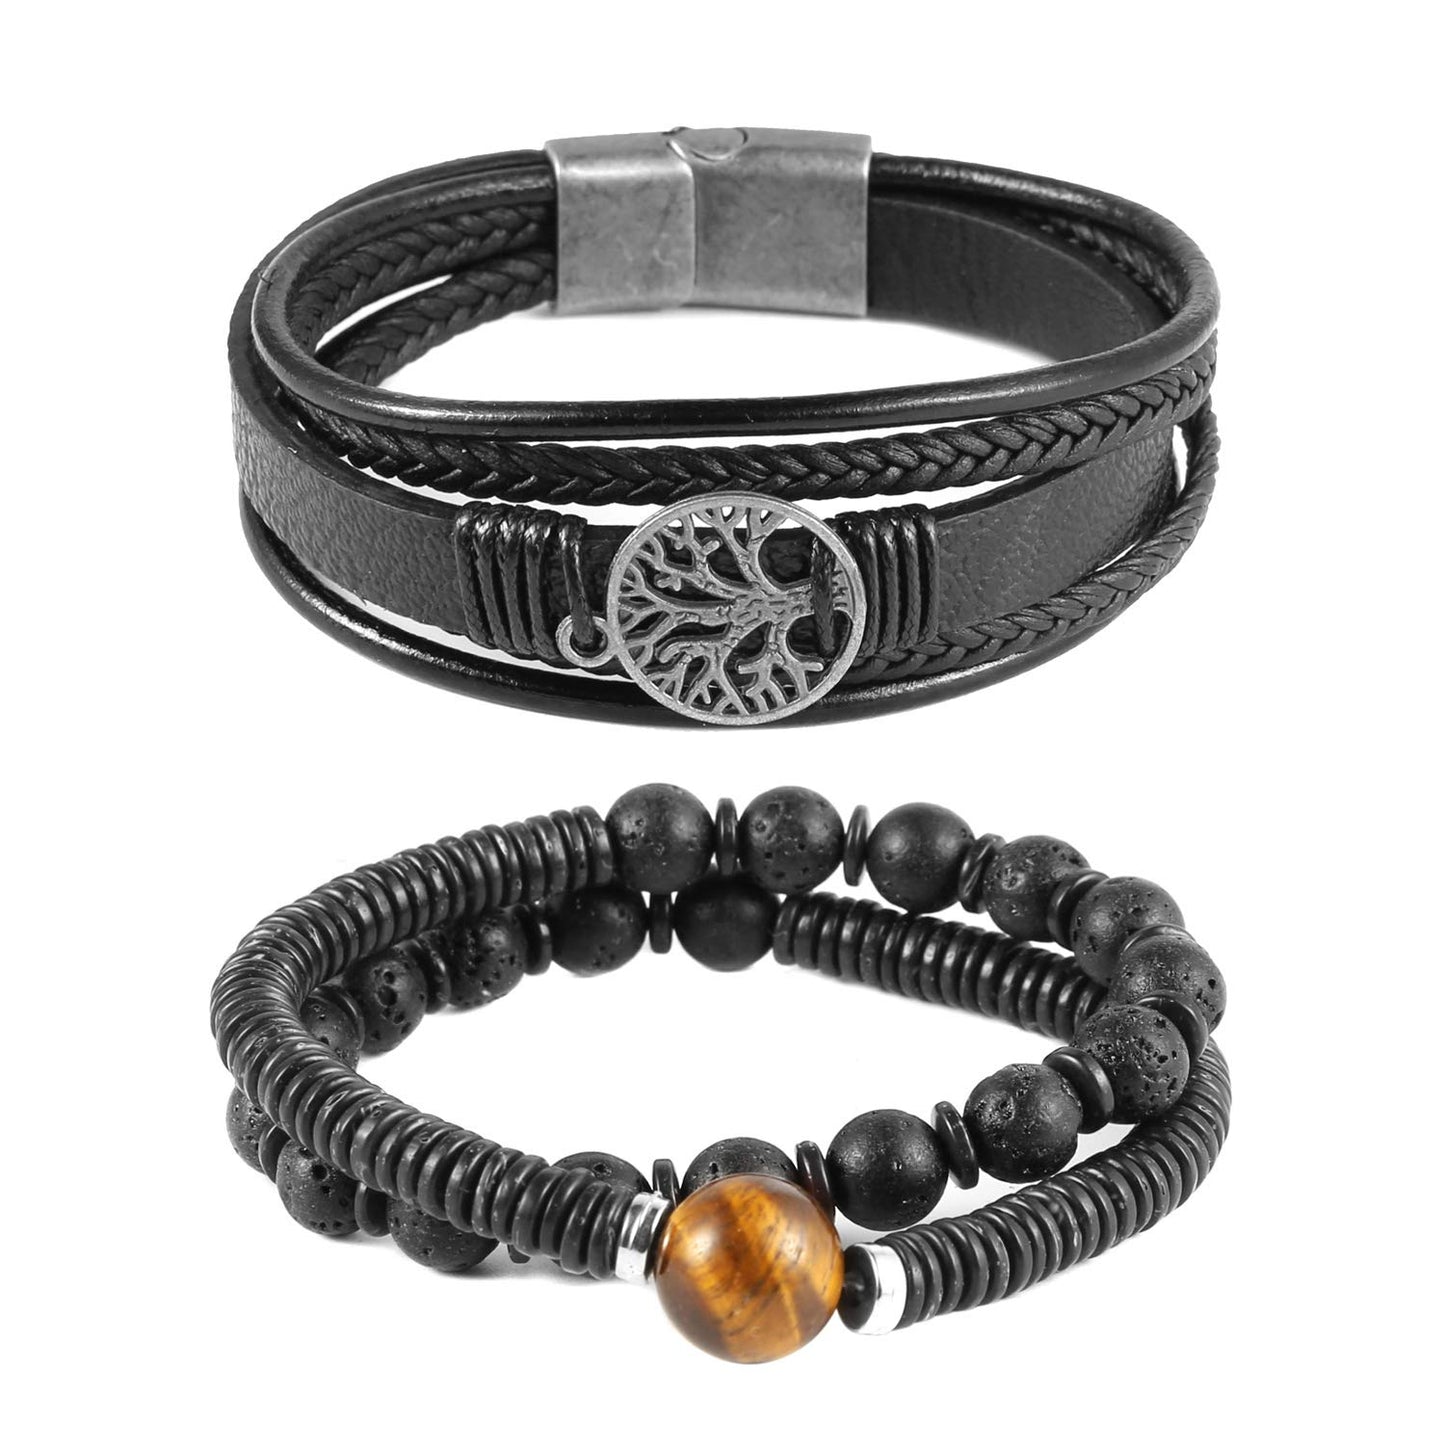 HZMAN Genuine Leather Tree of life Bracelets Men Women, Tiger Eye Natural Stone Lava Rock Beads Ethnic Tribal Elastic Bracelets Wristbands Classic Set